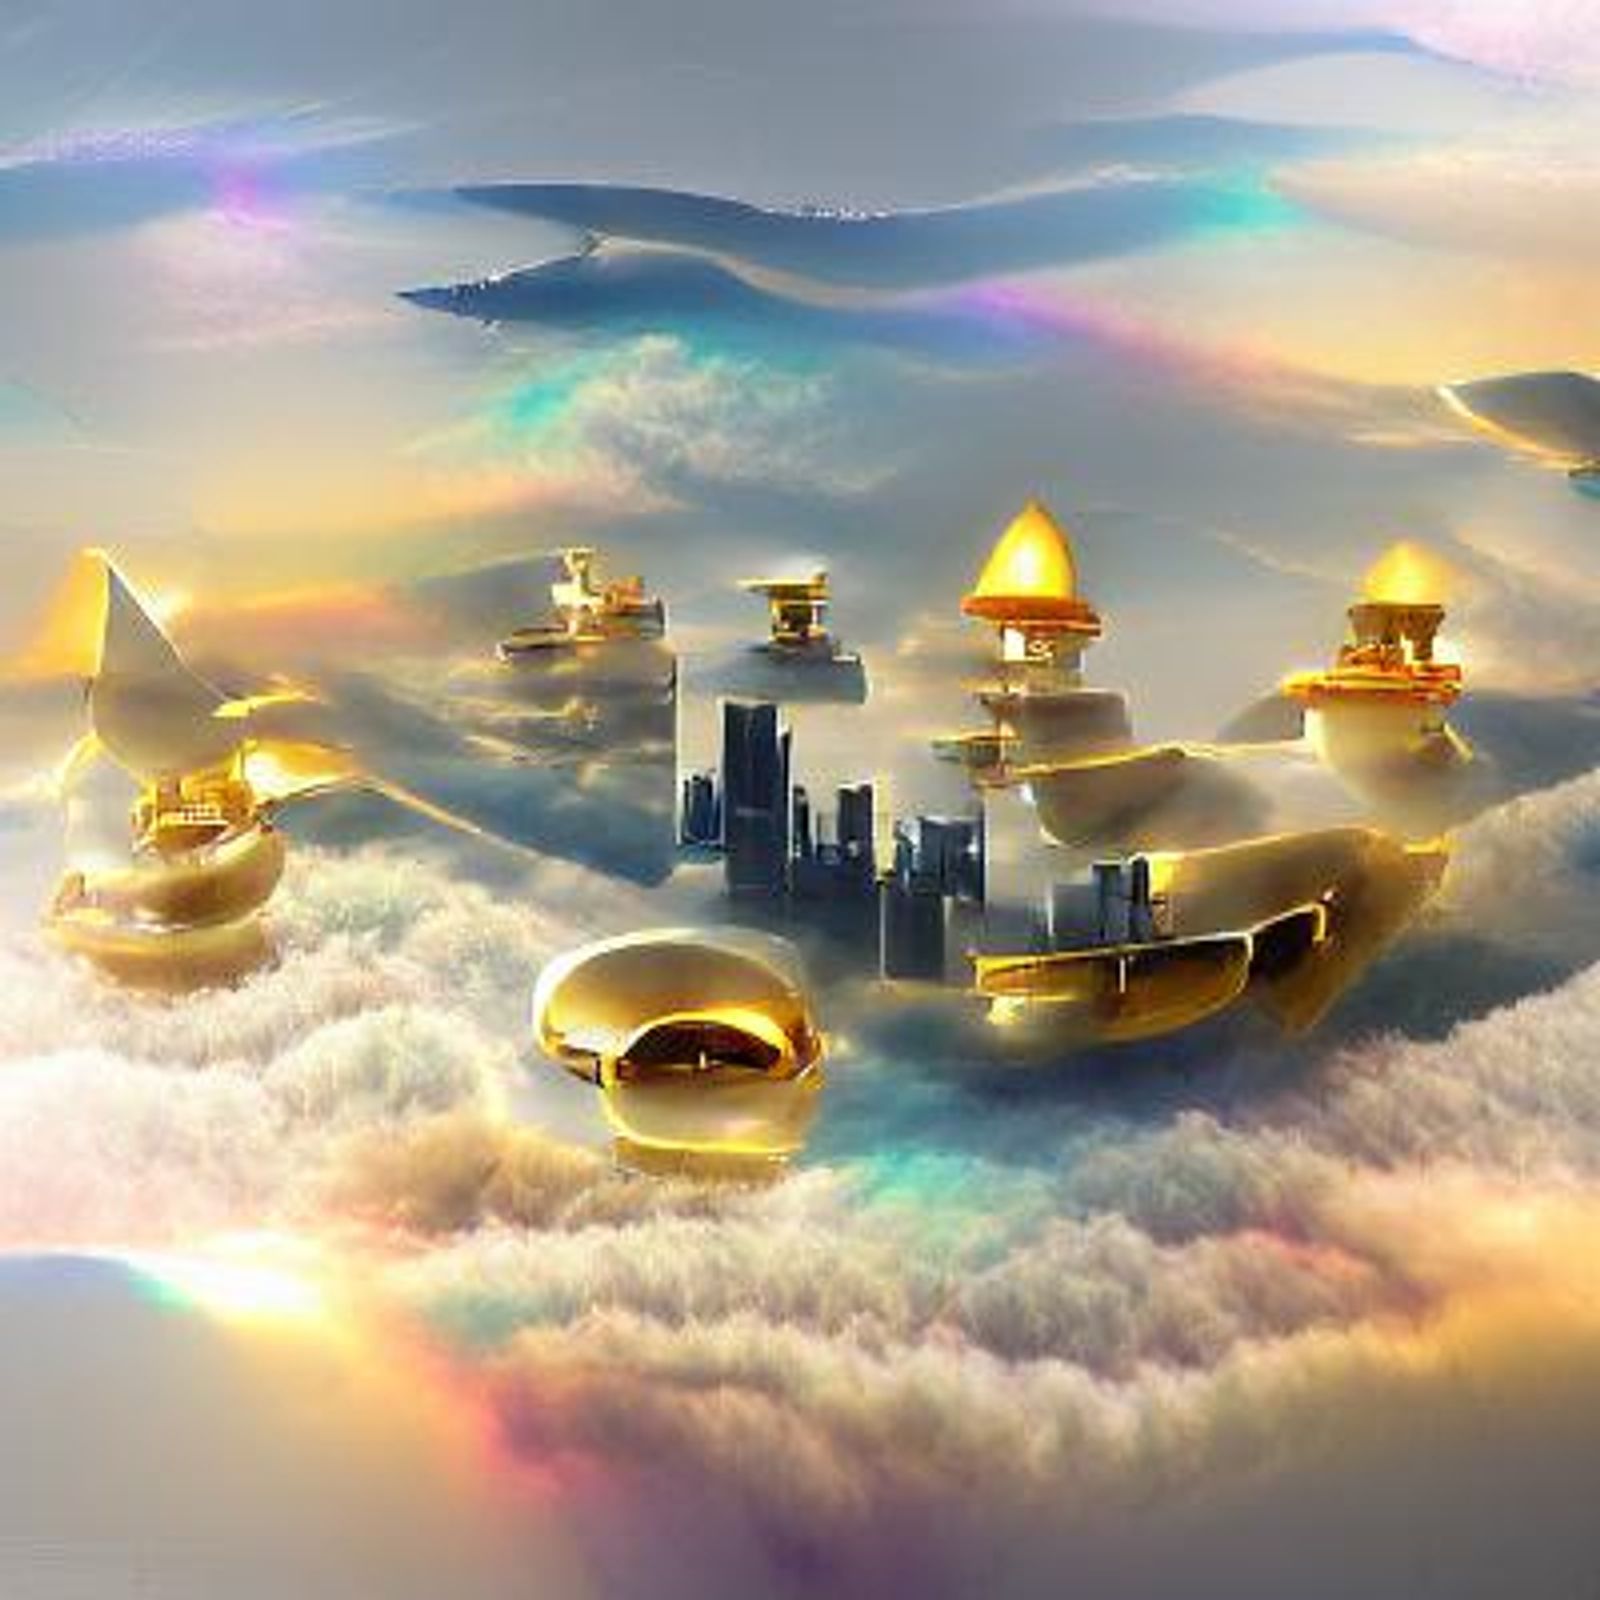 futuristic floating city